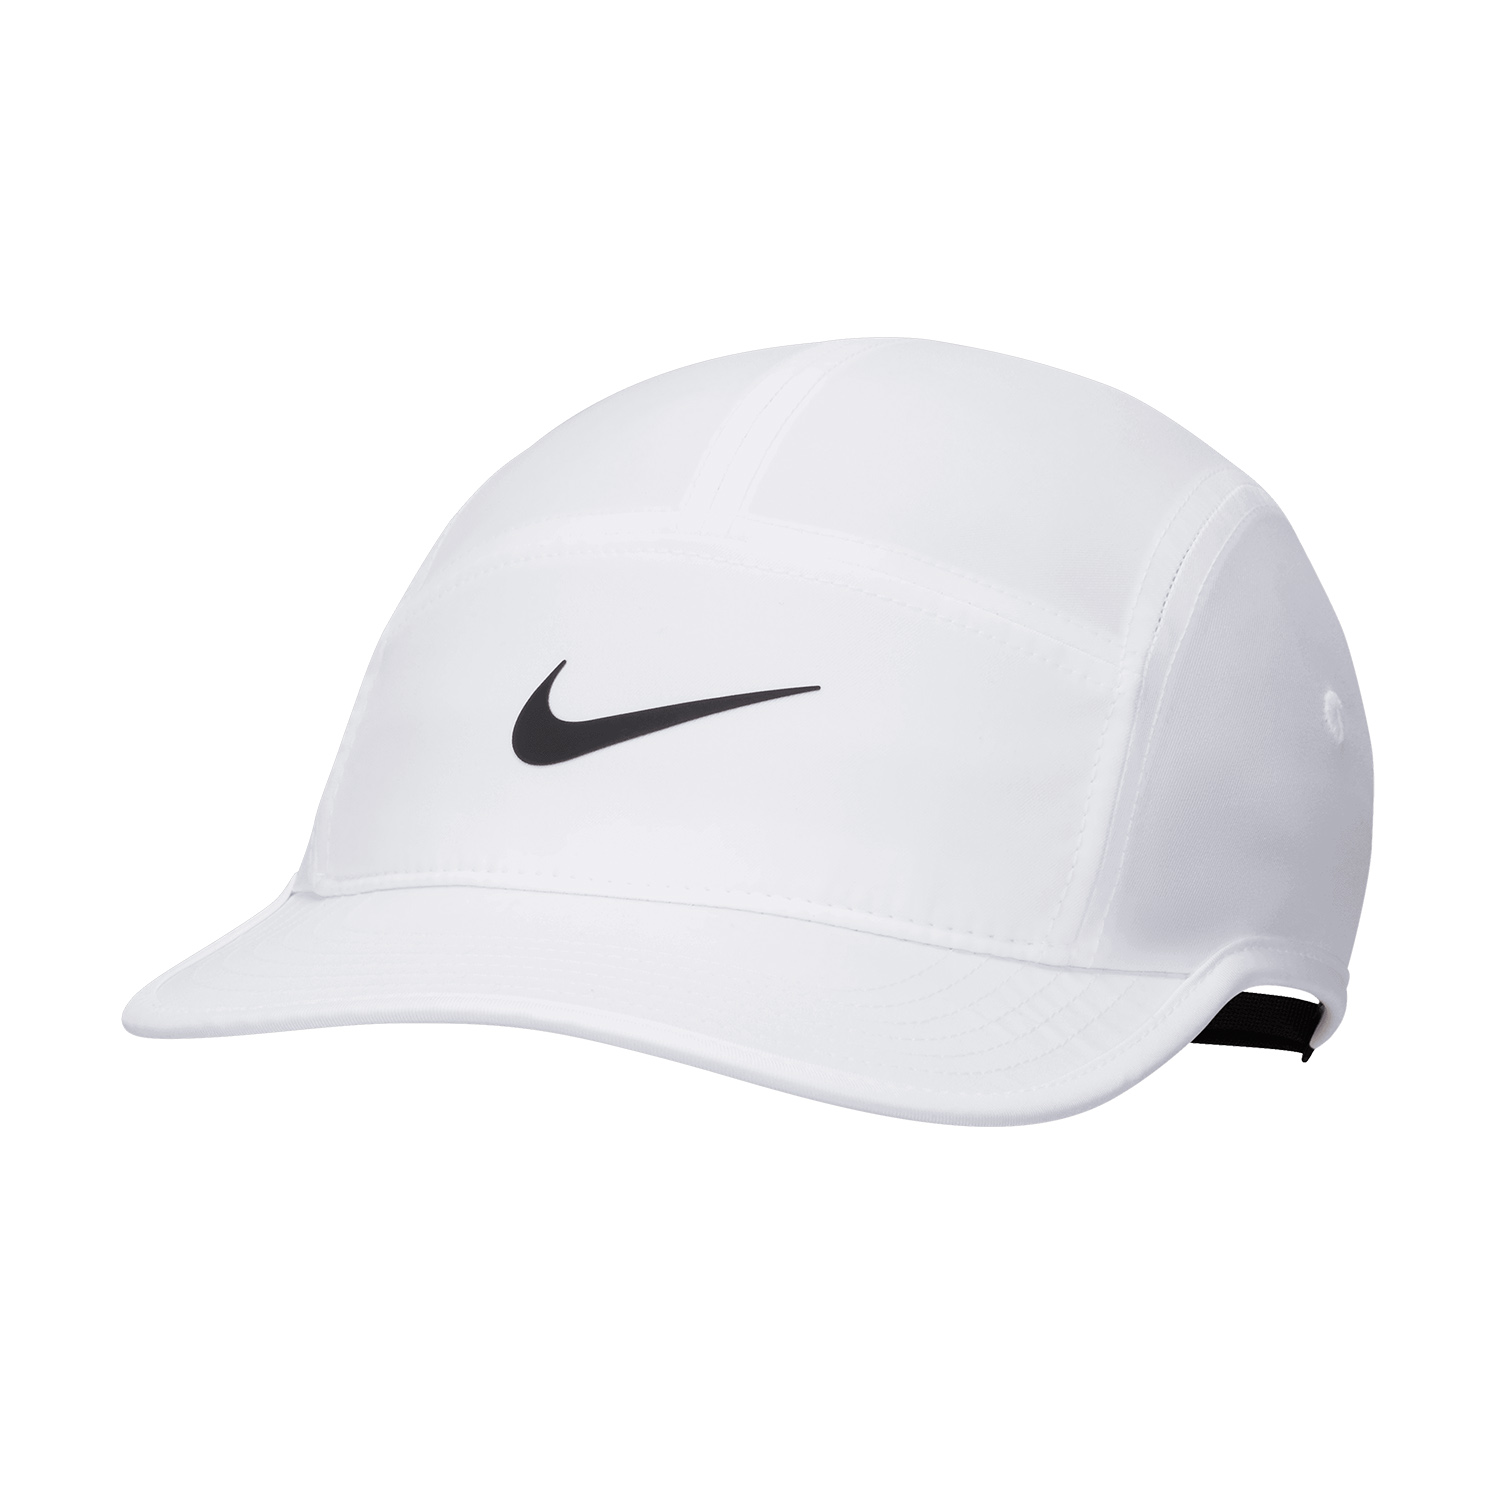 Nike Dri-FIT Fly Cap - White/Anthracite/Black